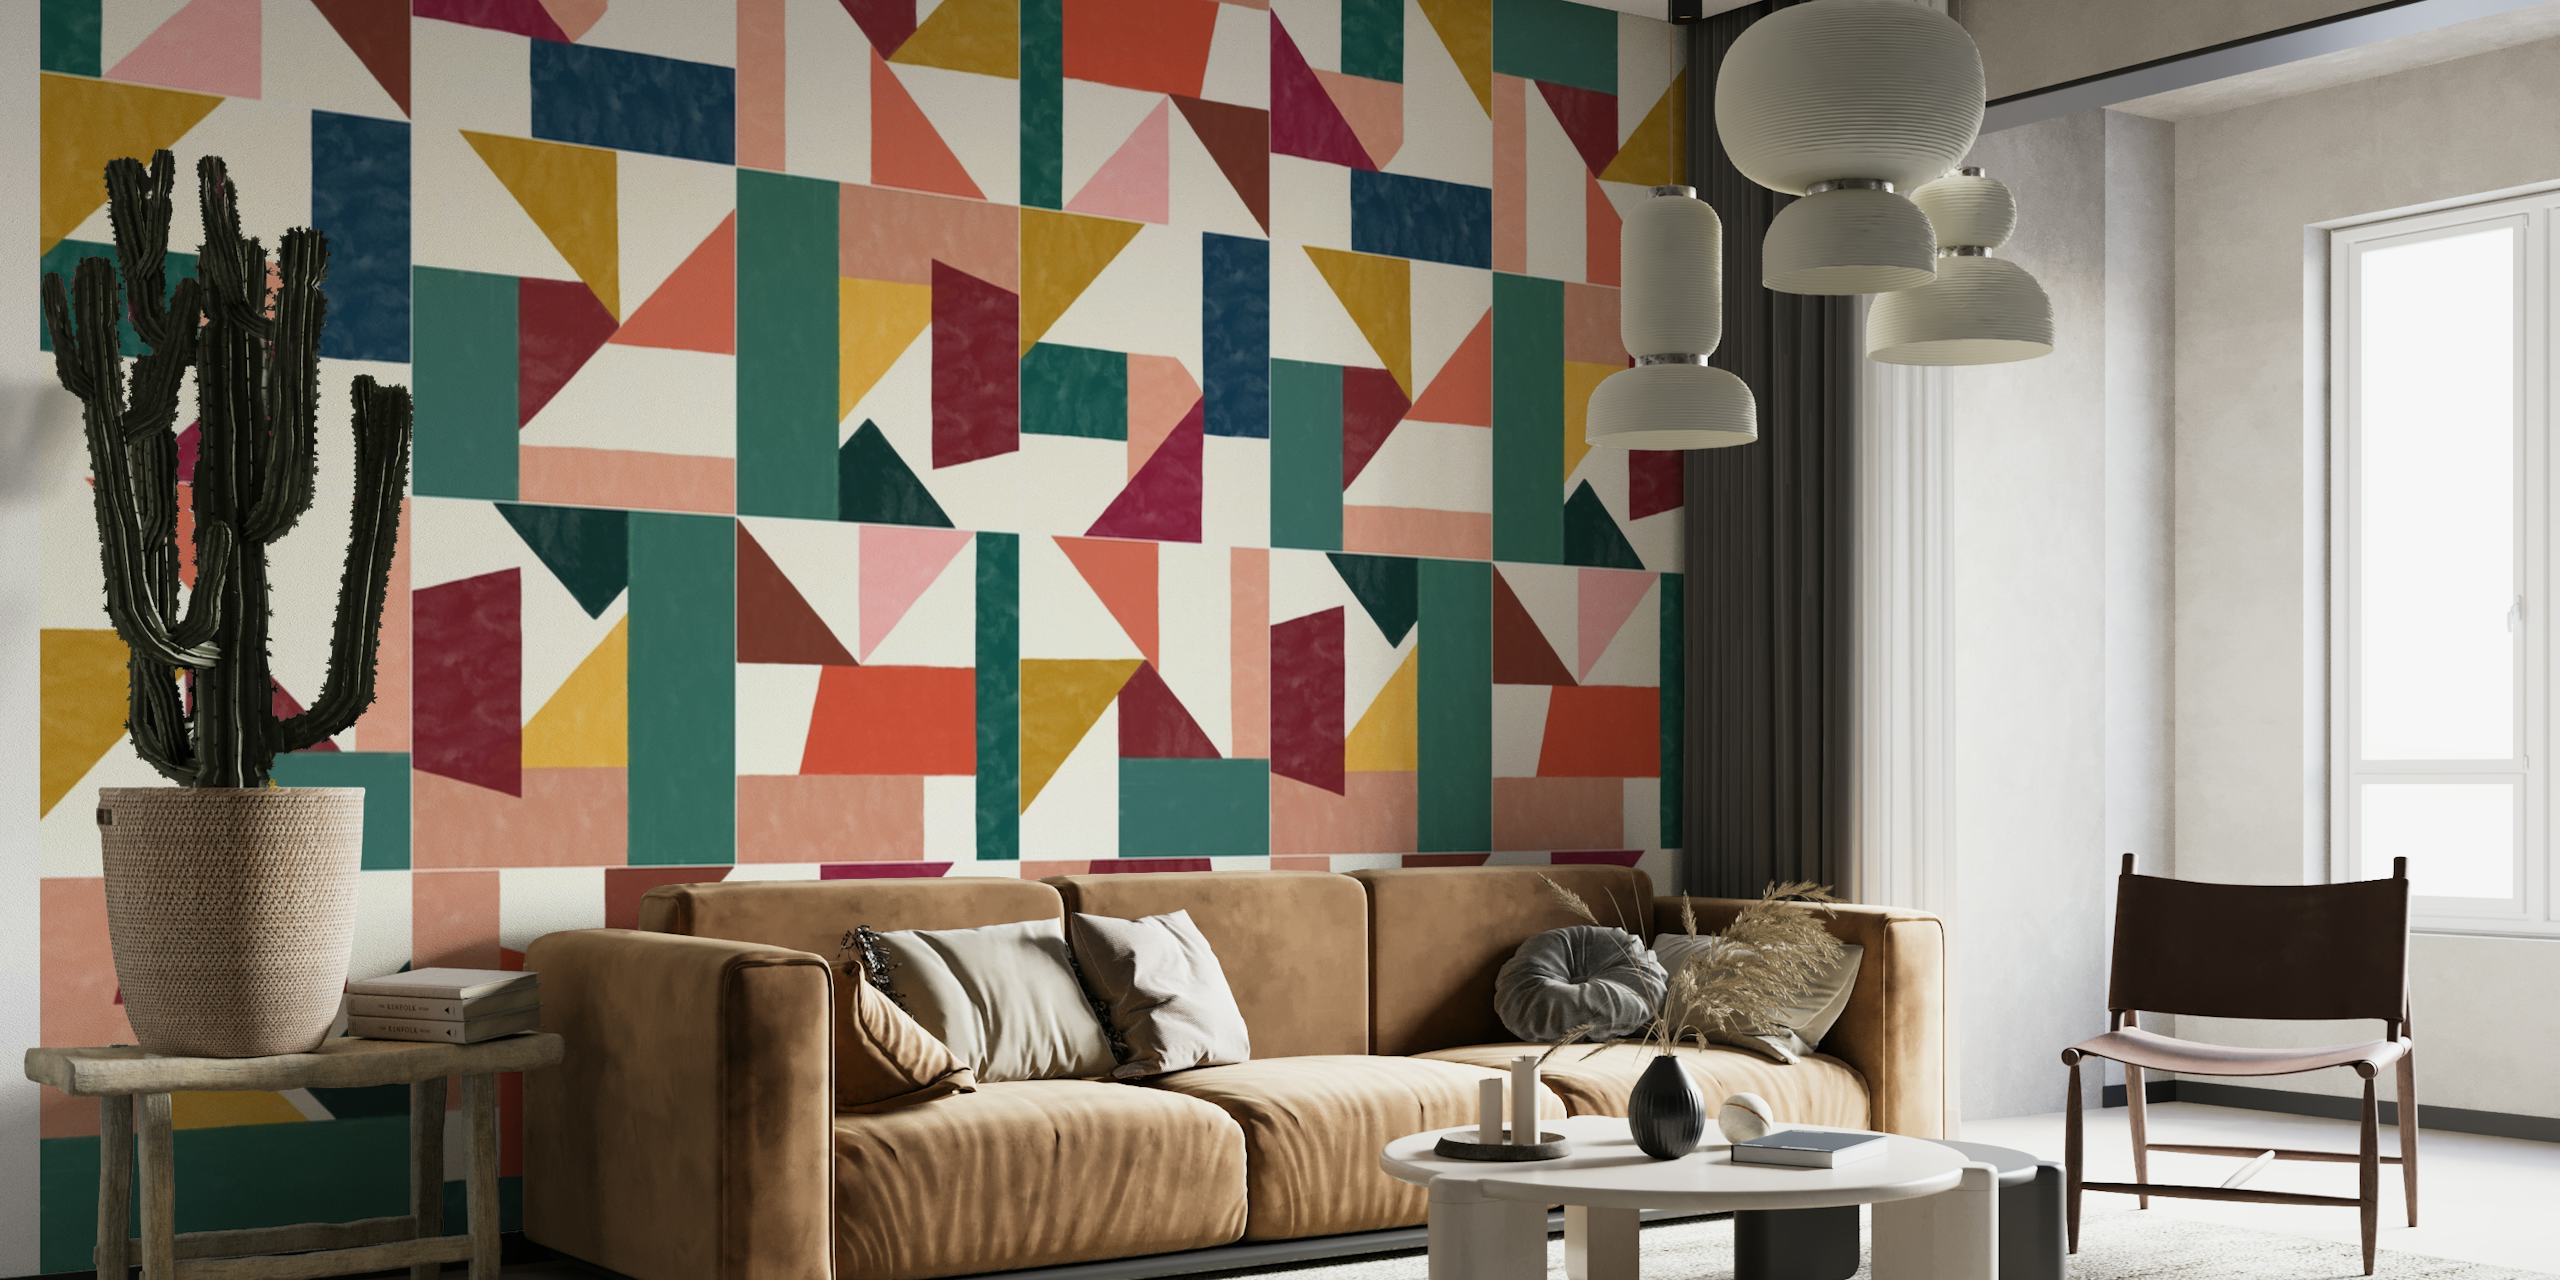 Tangram Wall Tiles One papel pintado